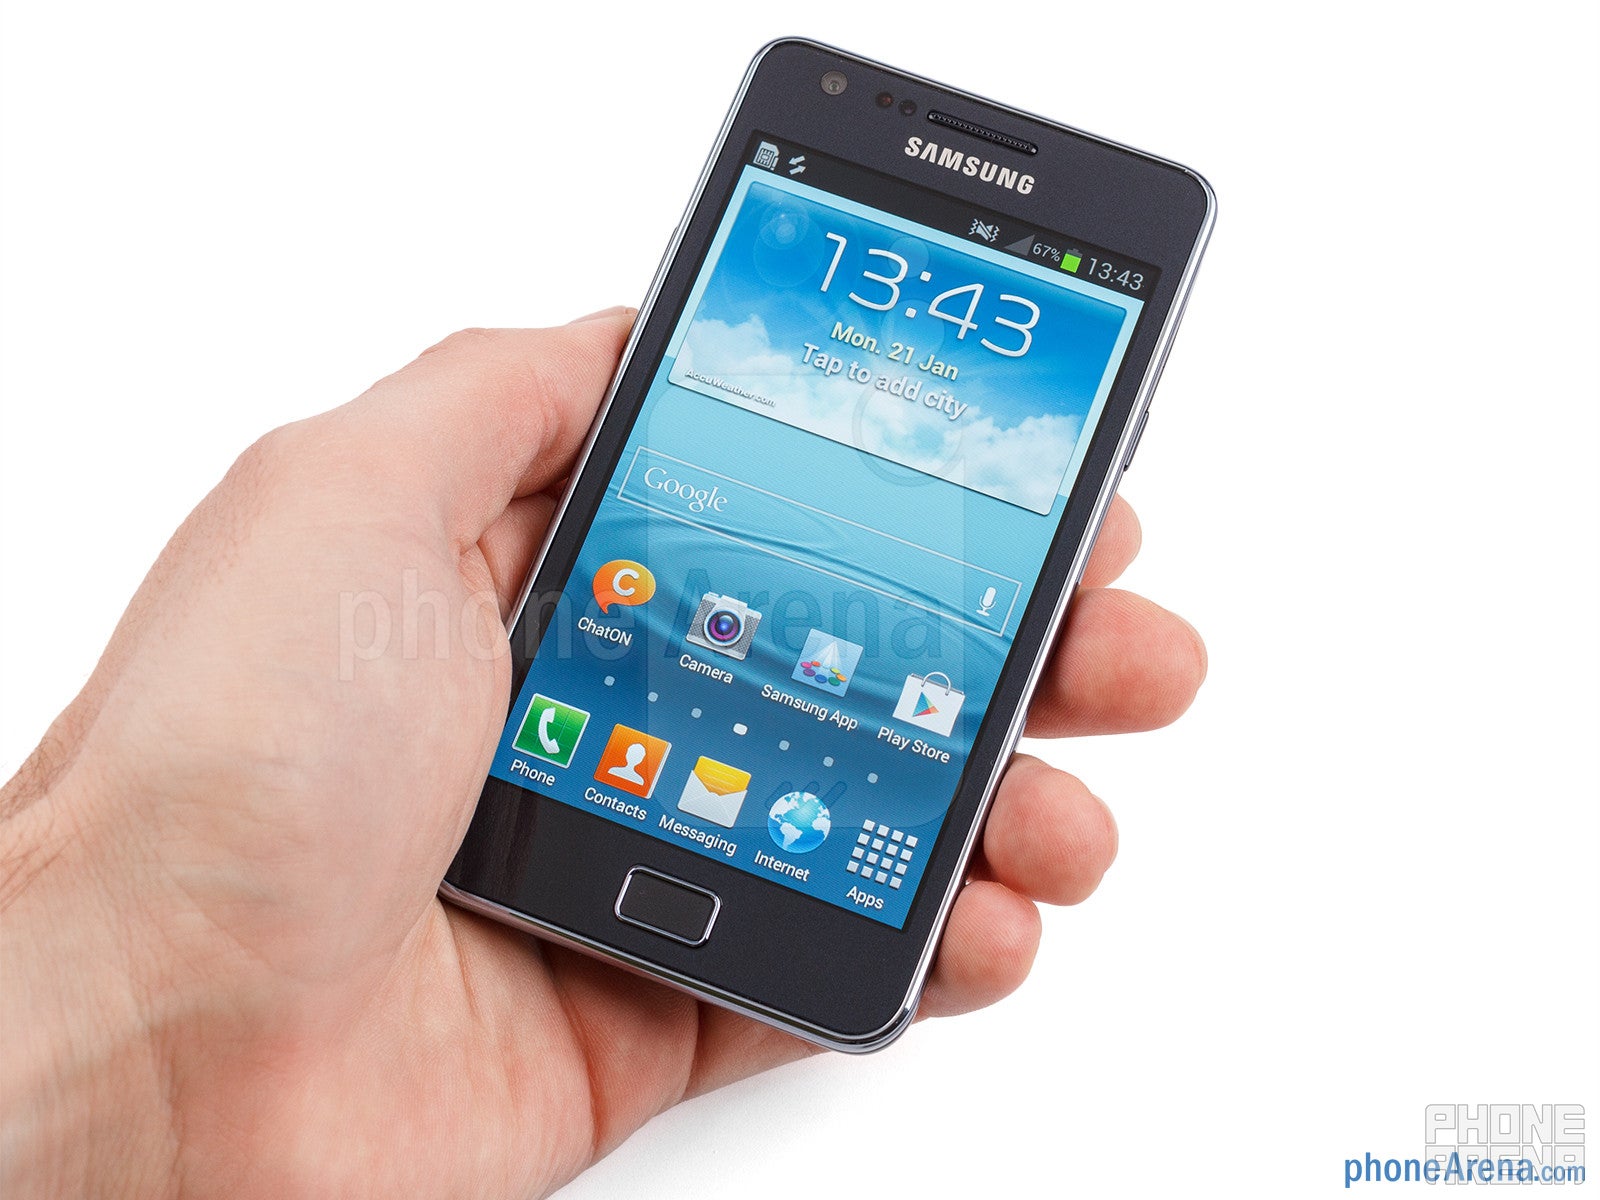 Samsung Galaxy S II Plus Review